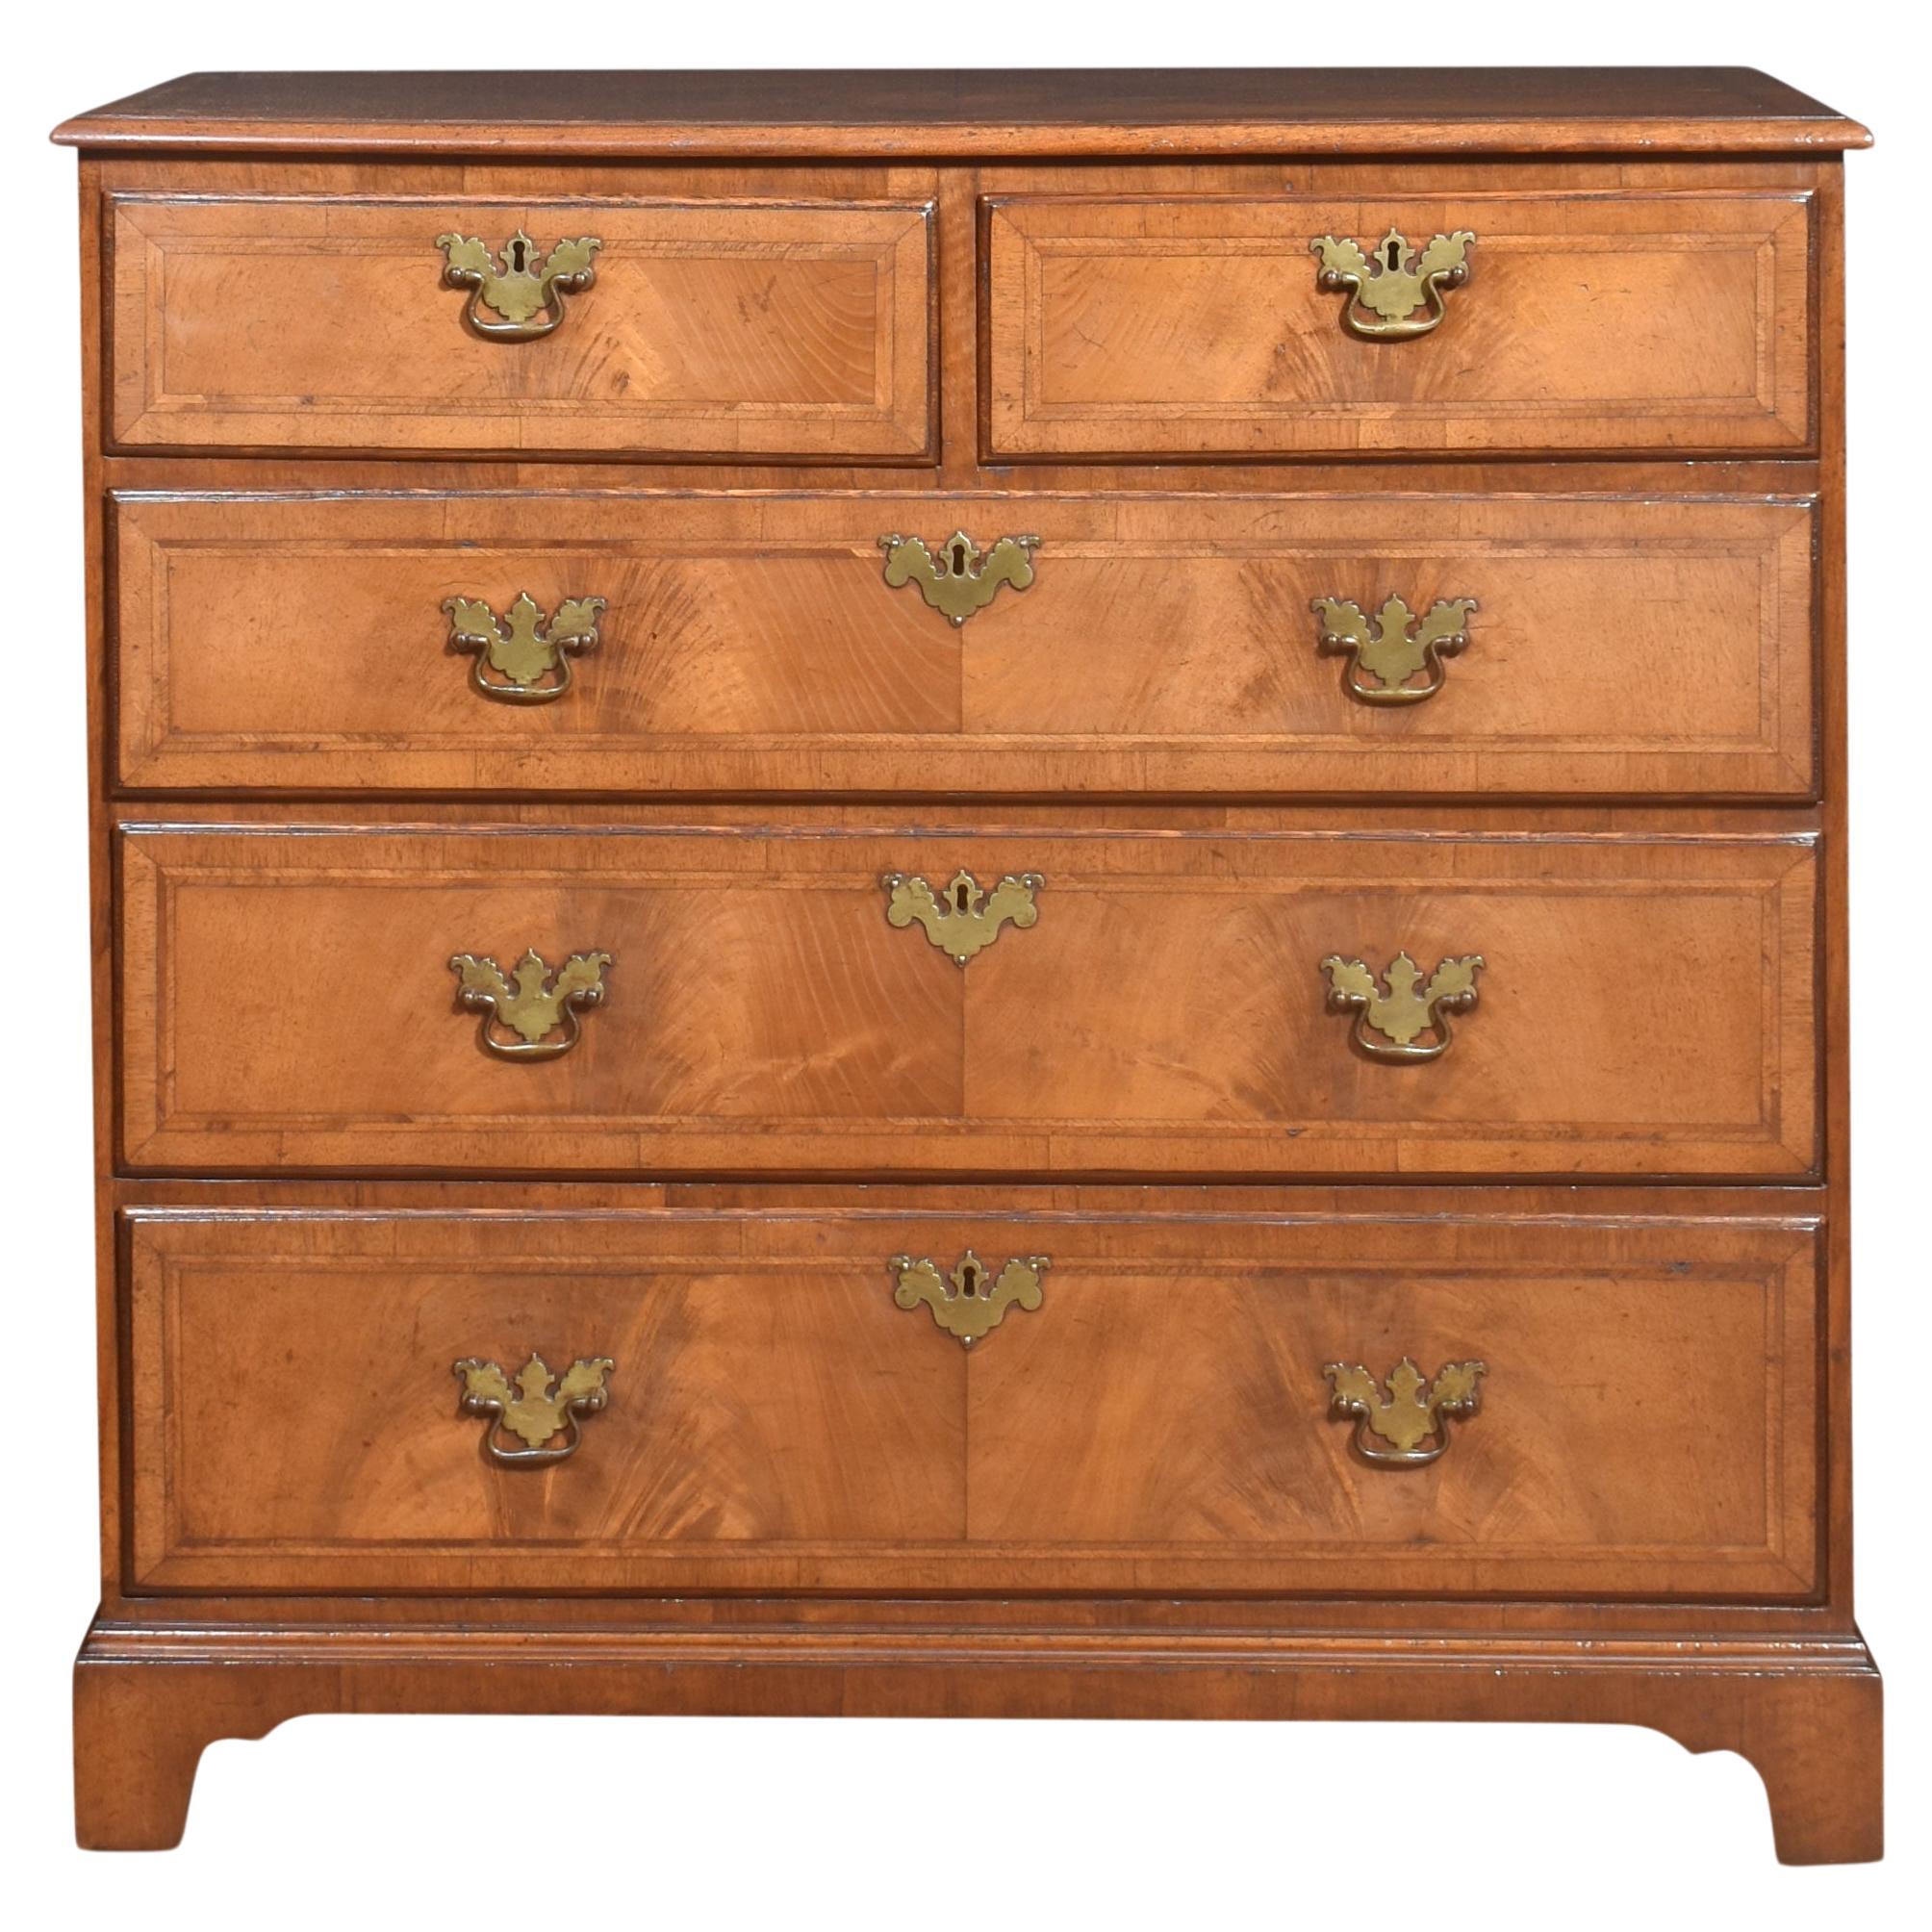 Georgian revival walnut chest of drawers